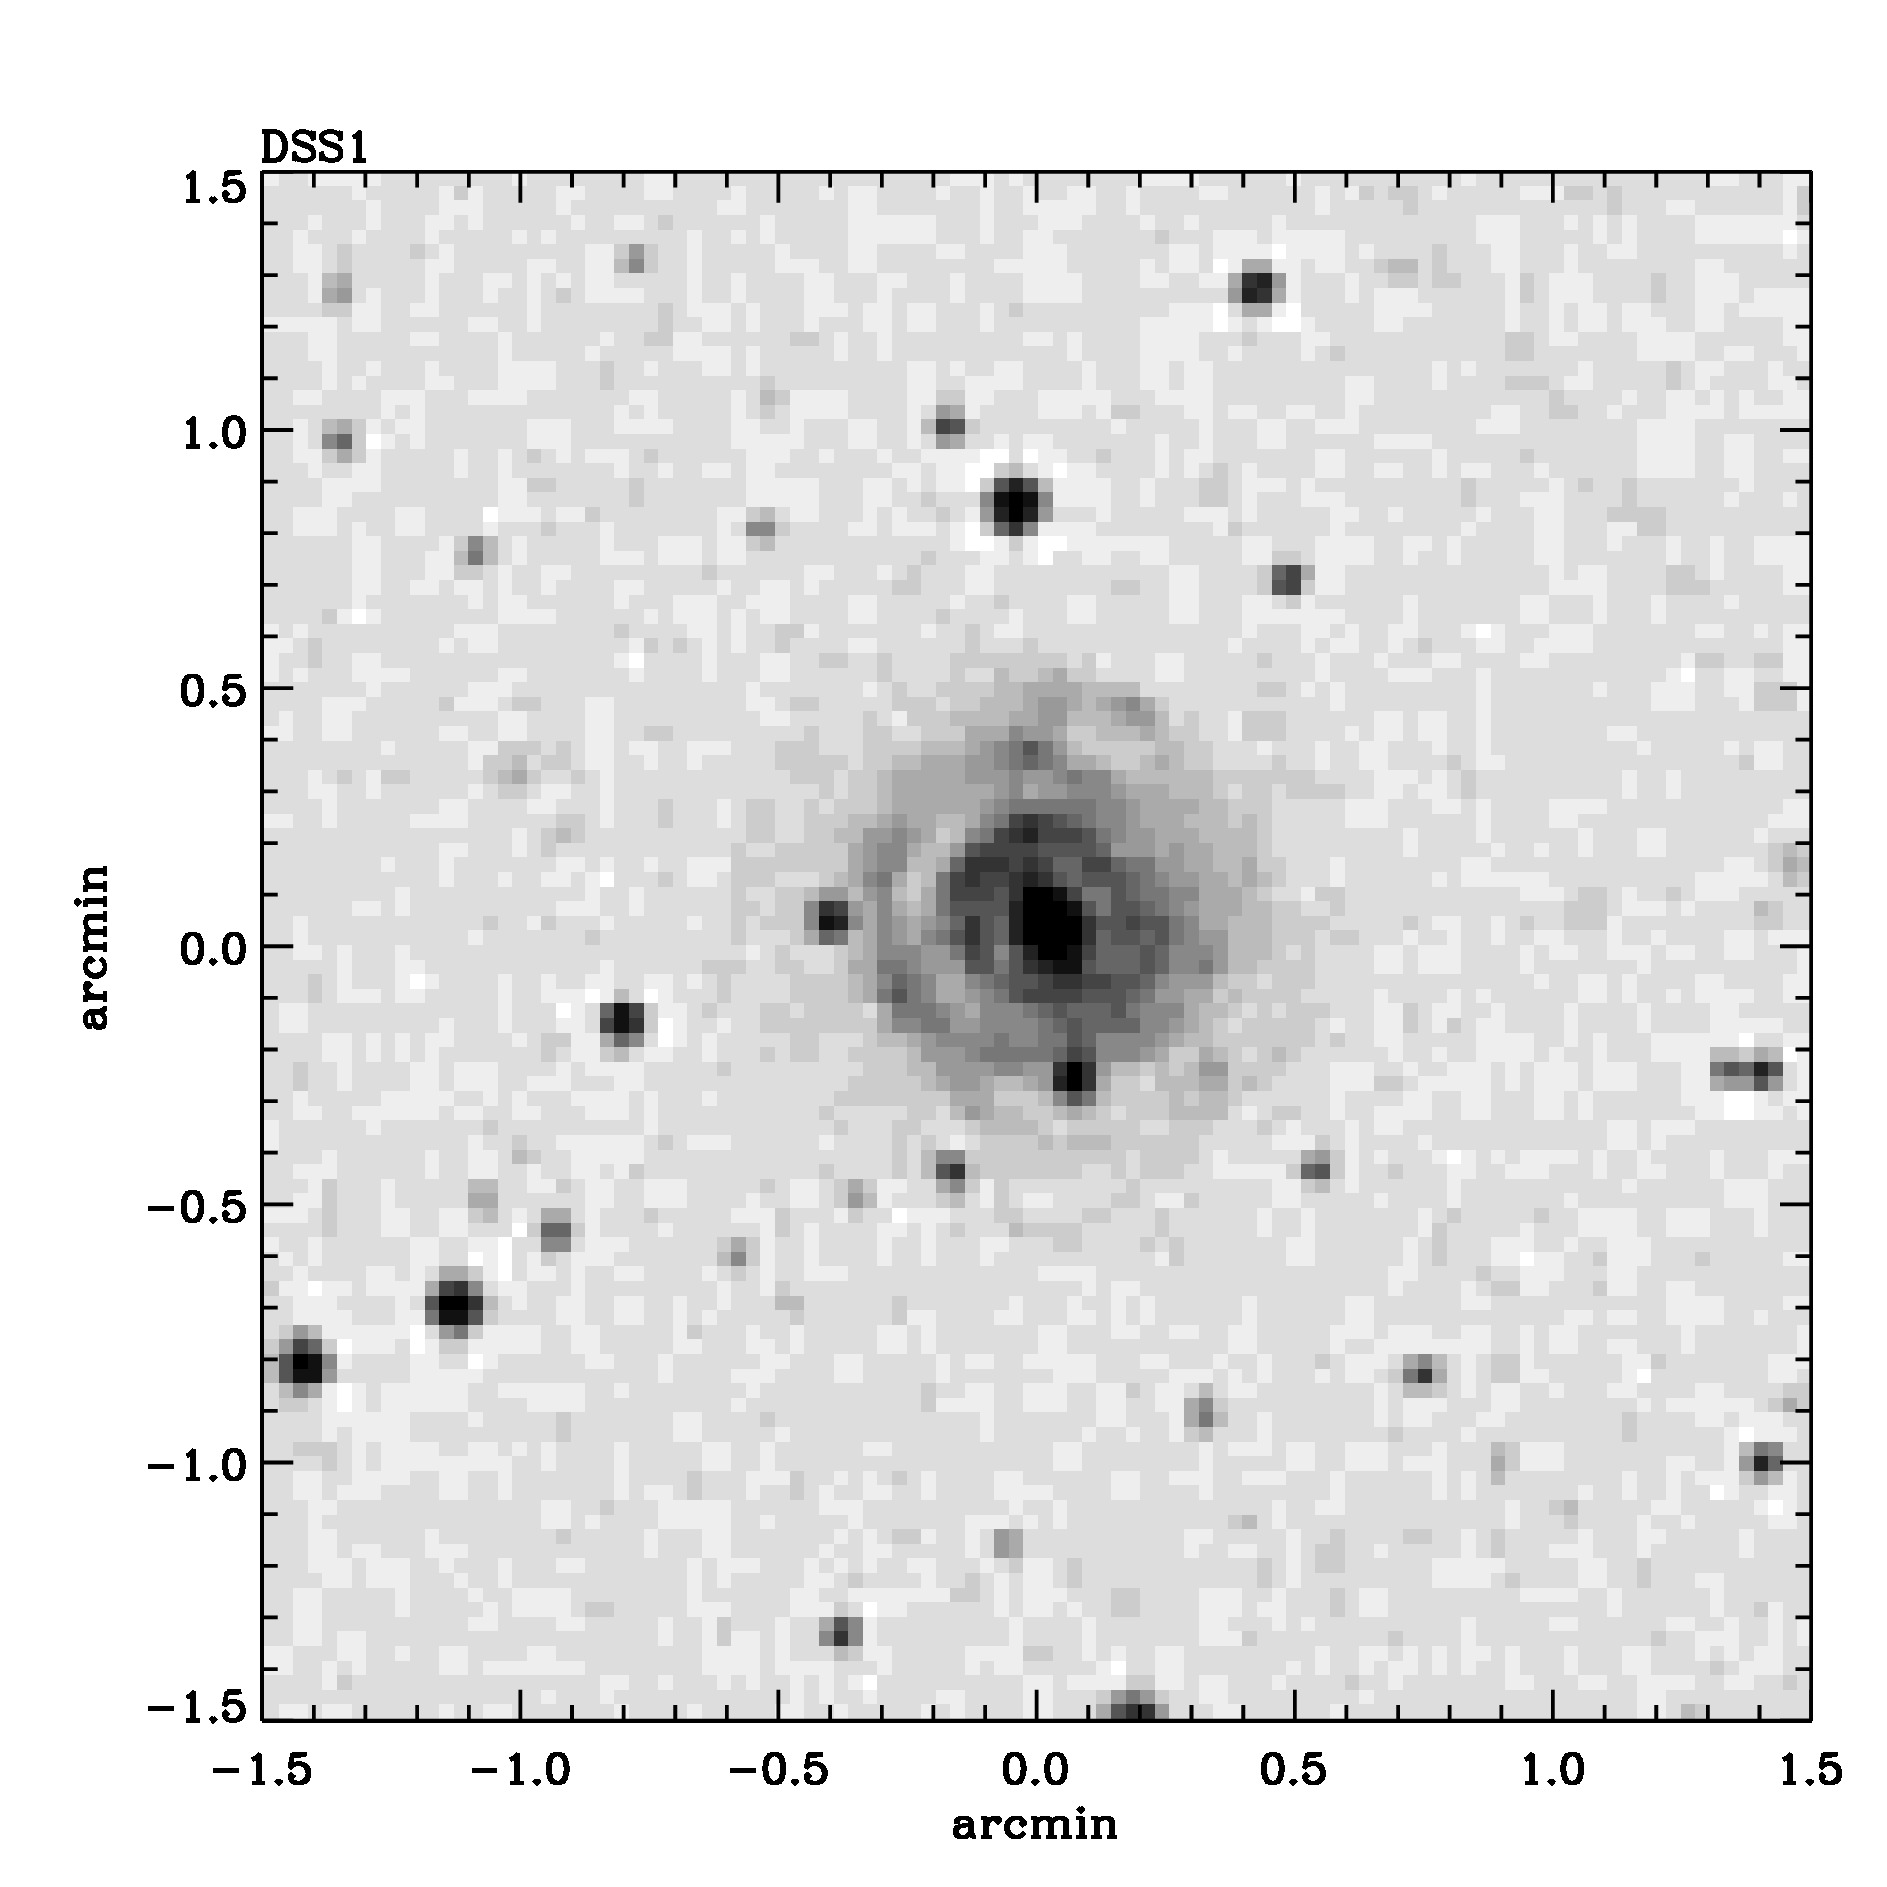 Optical image for SWIFT J1856.5-7851